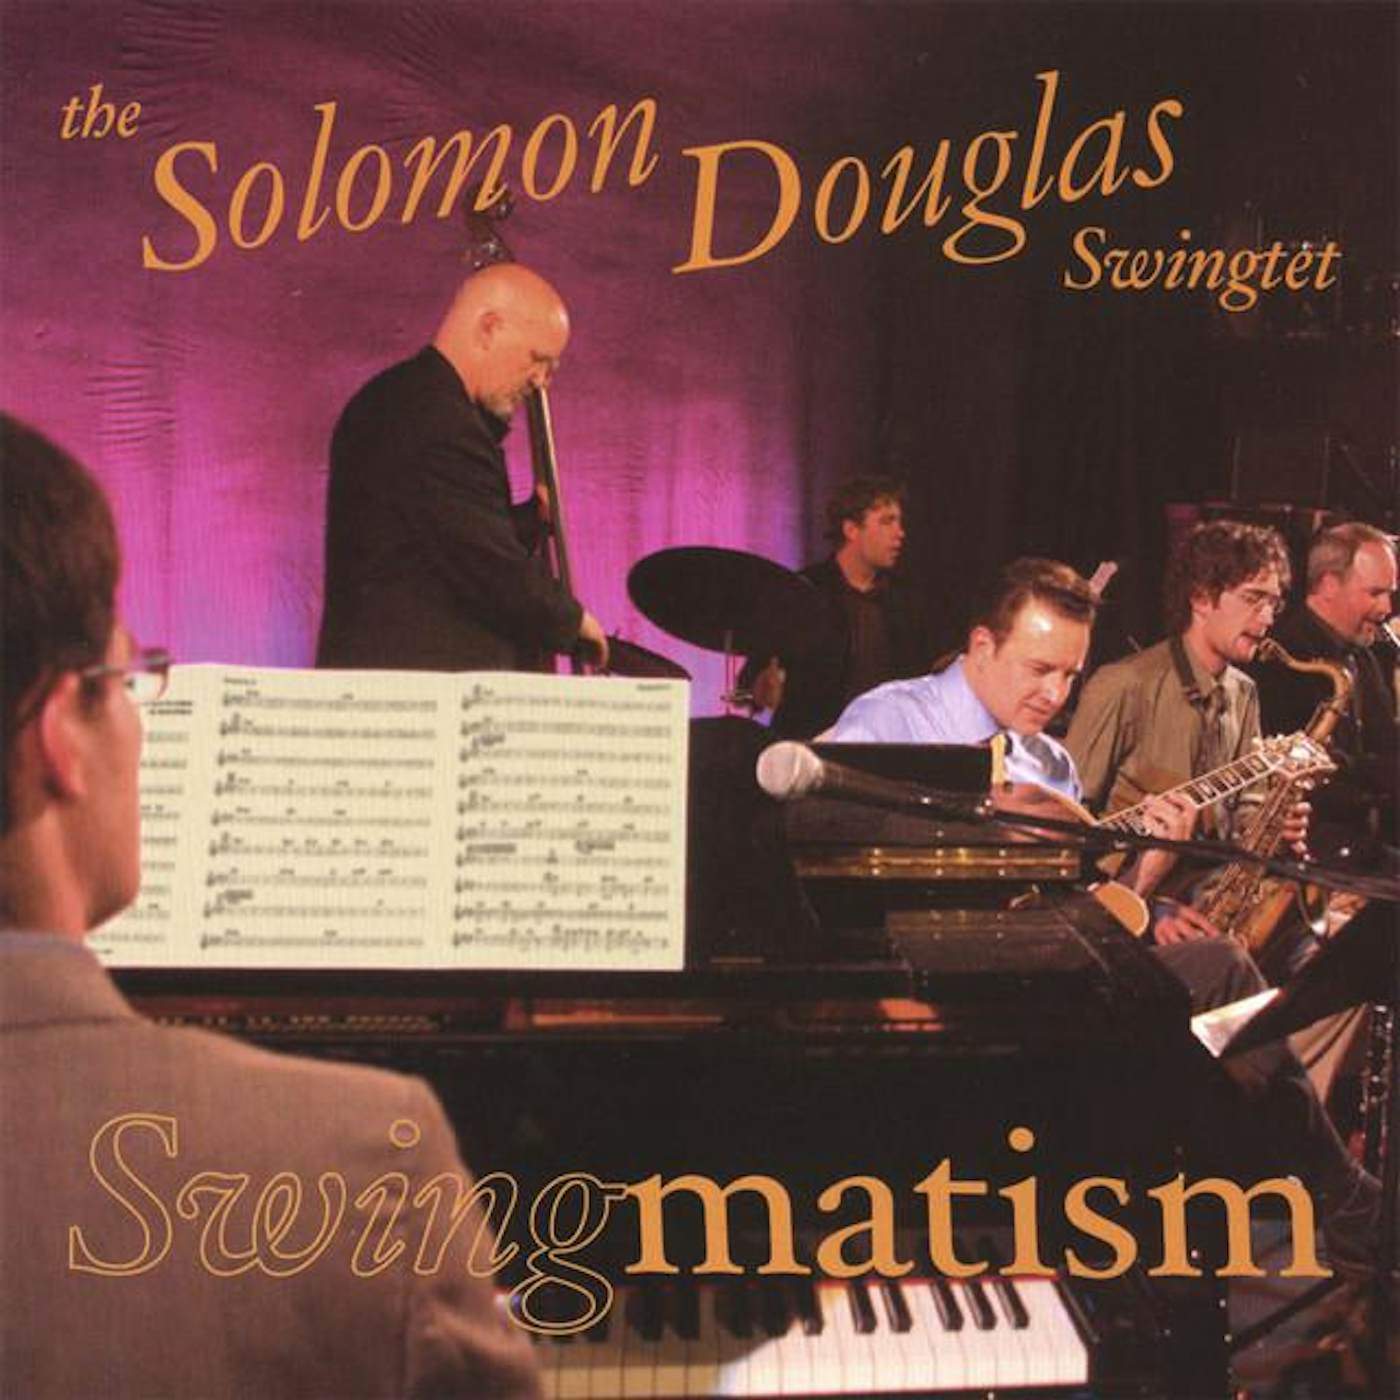 The Solomon Douglas Swingtet